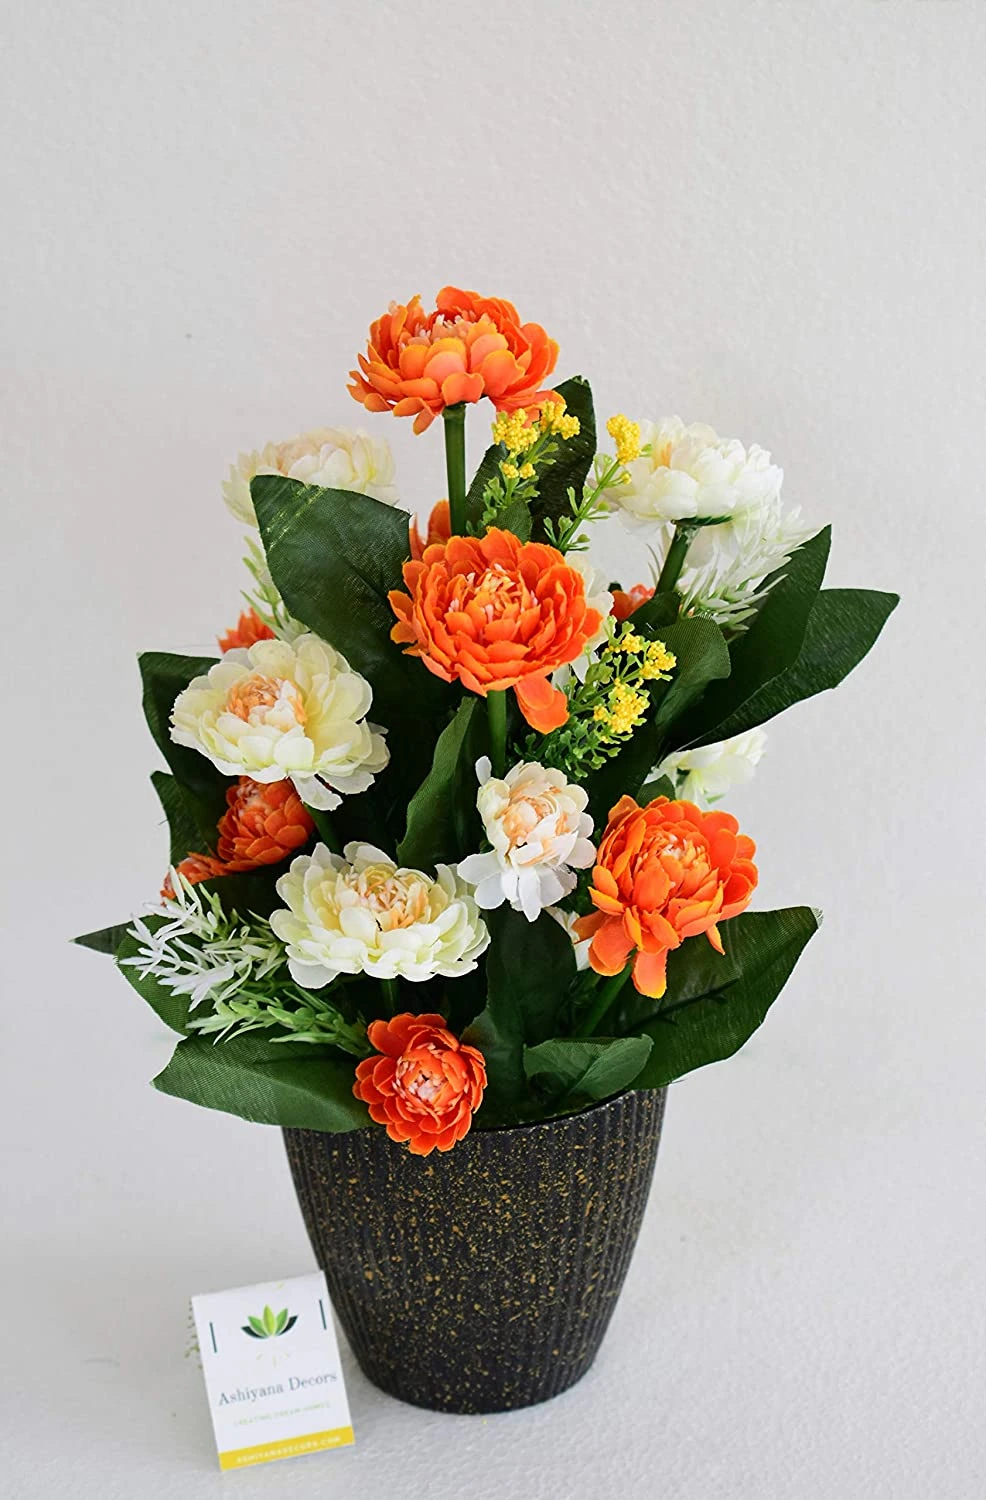 Flower Basket / Pooja Basket / Puja Room Decoration Items | eBay